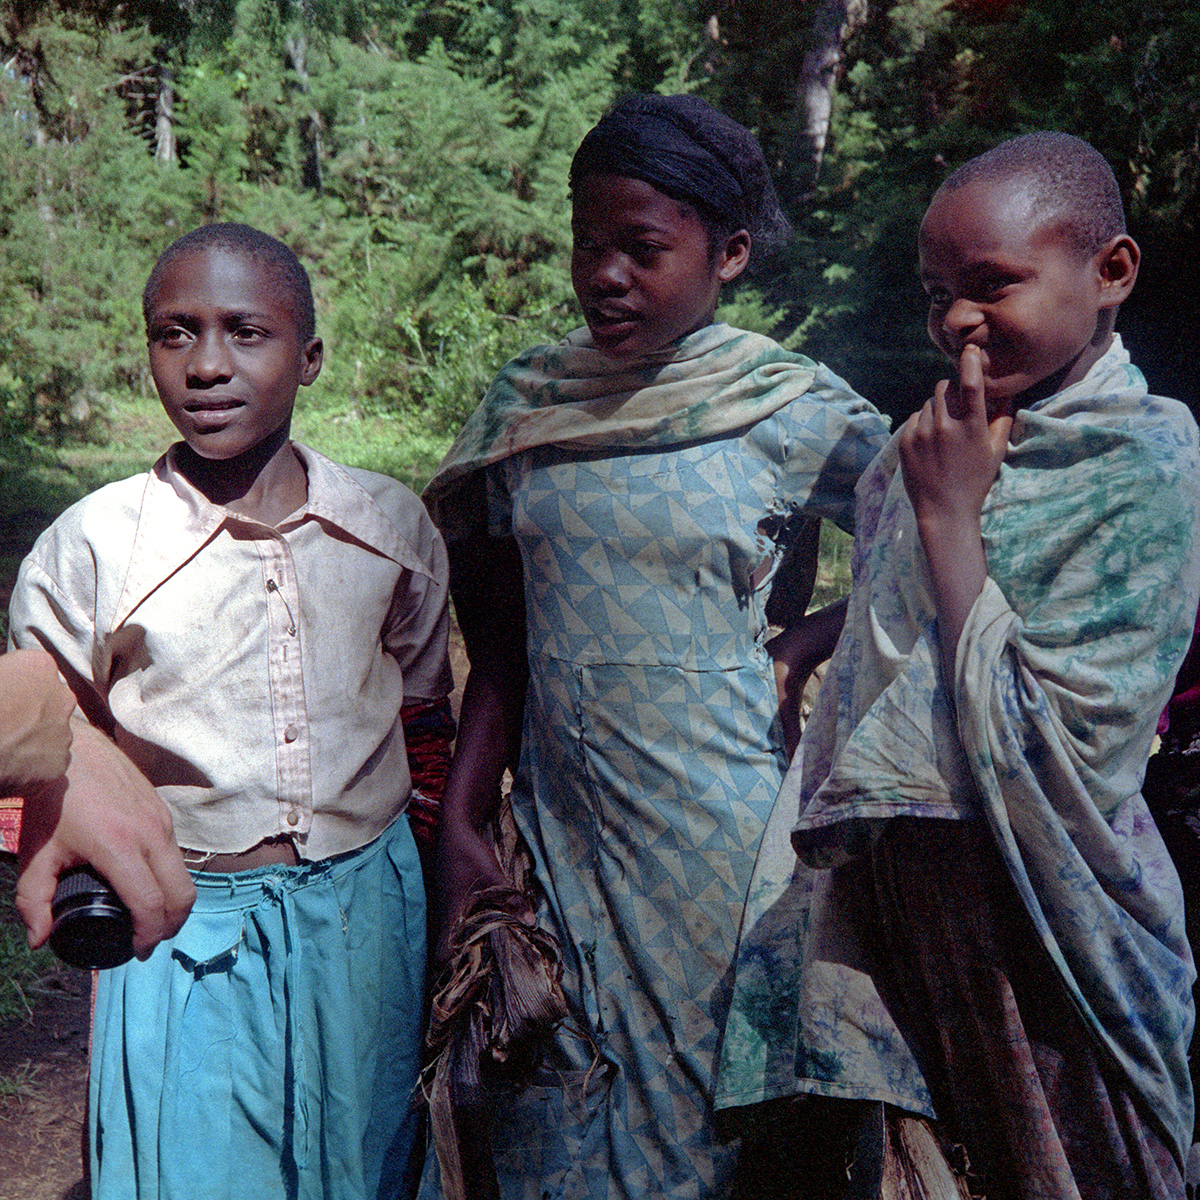 Girls we met on the lower slopes of Kilimanjaro